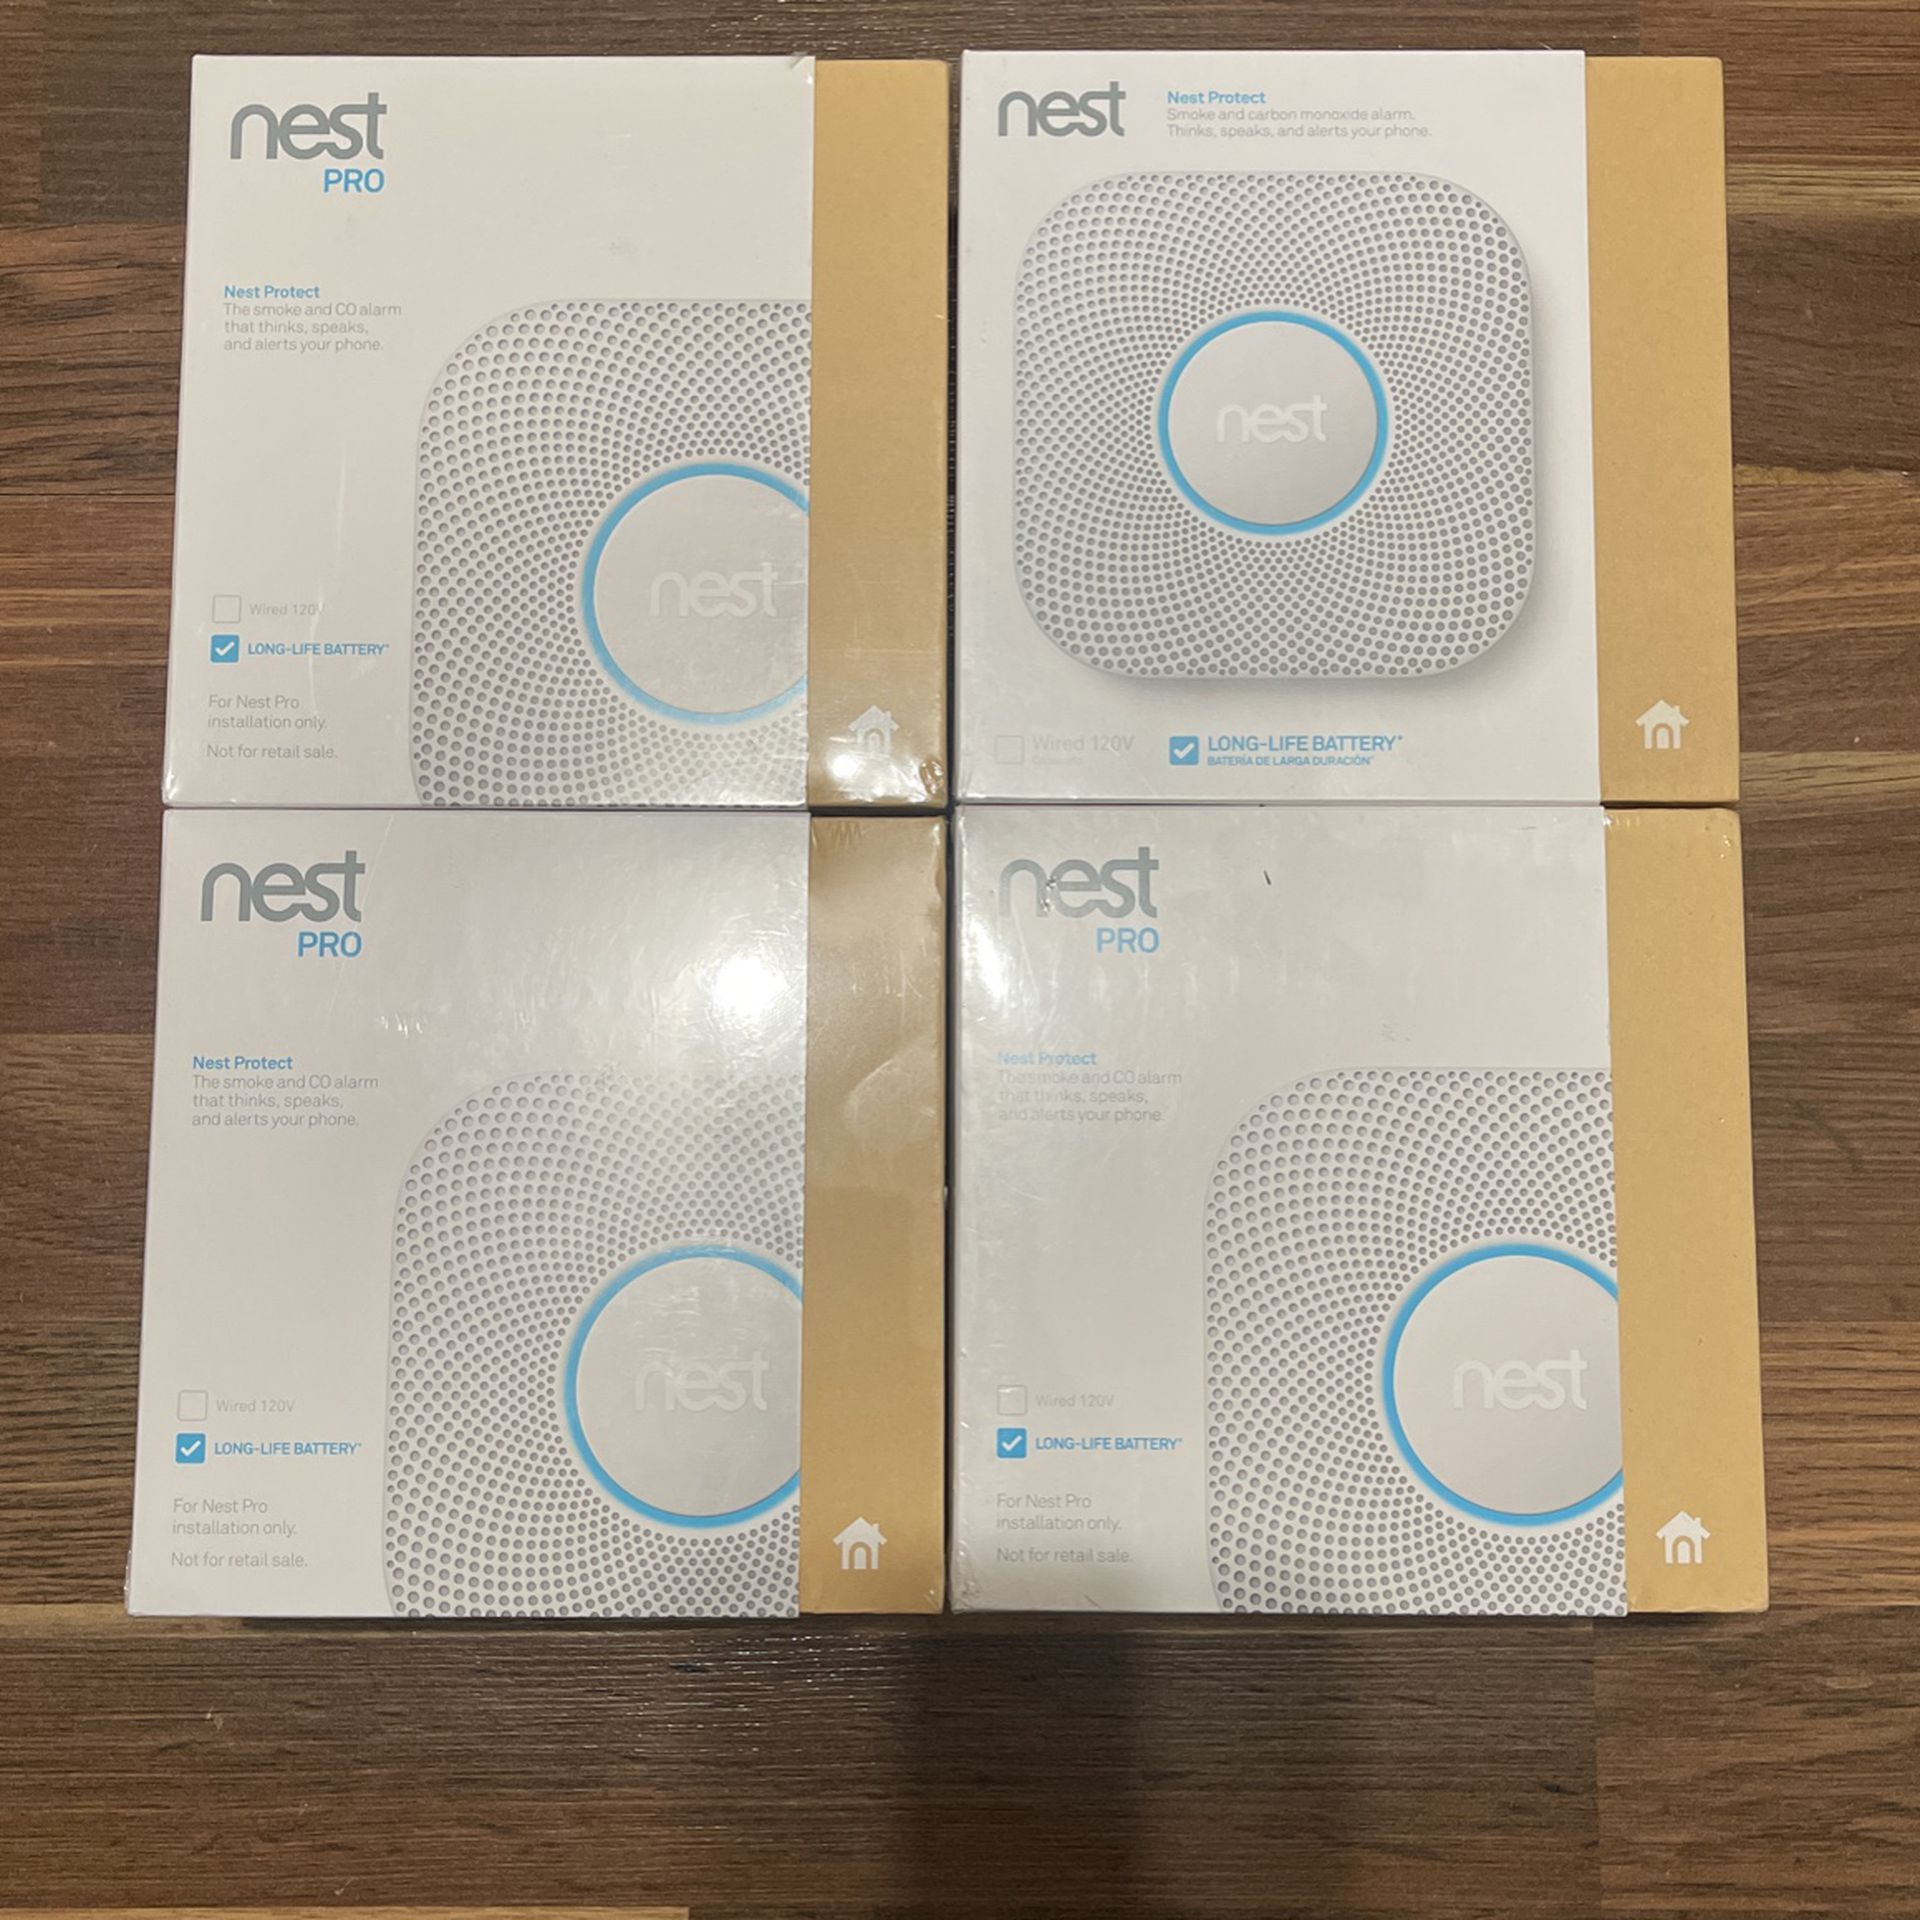 5 Nest Pro Smoke And Co Alarm Battery